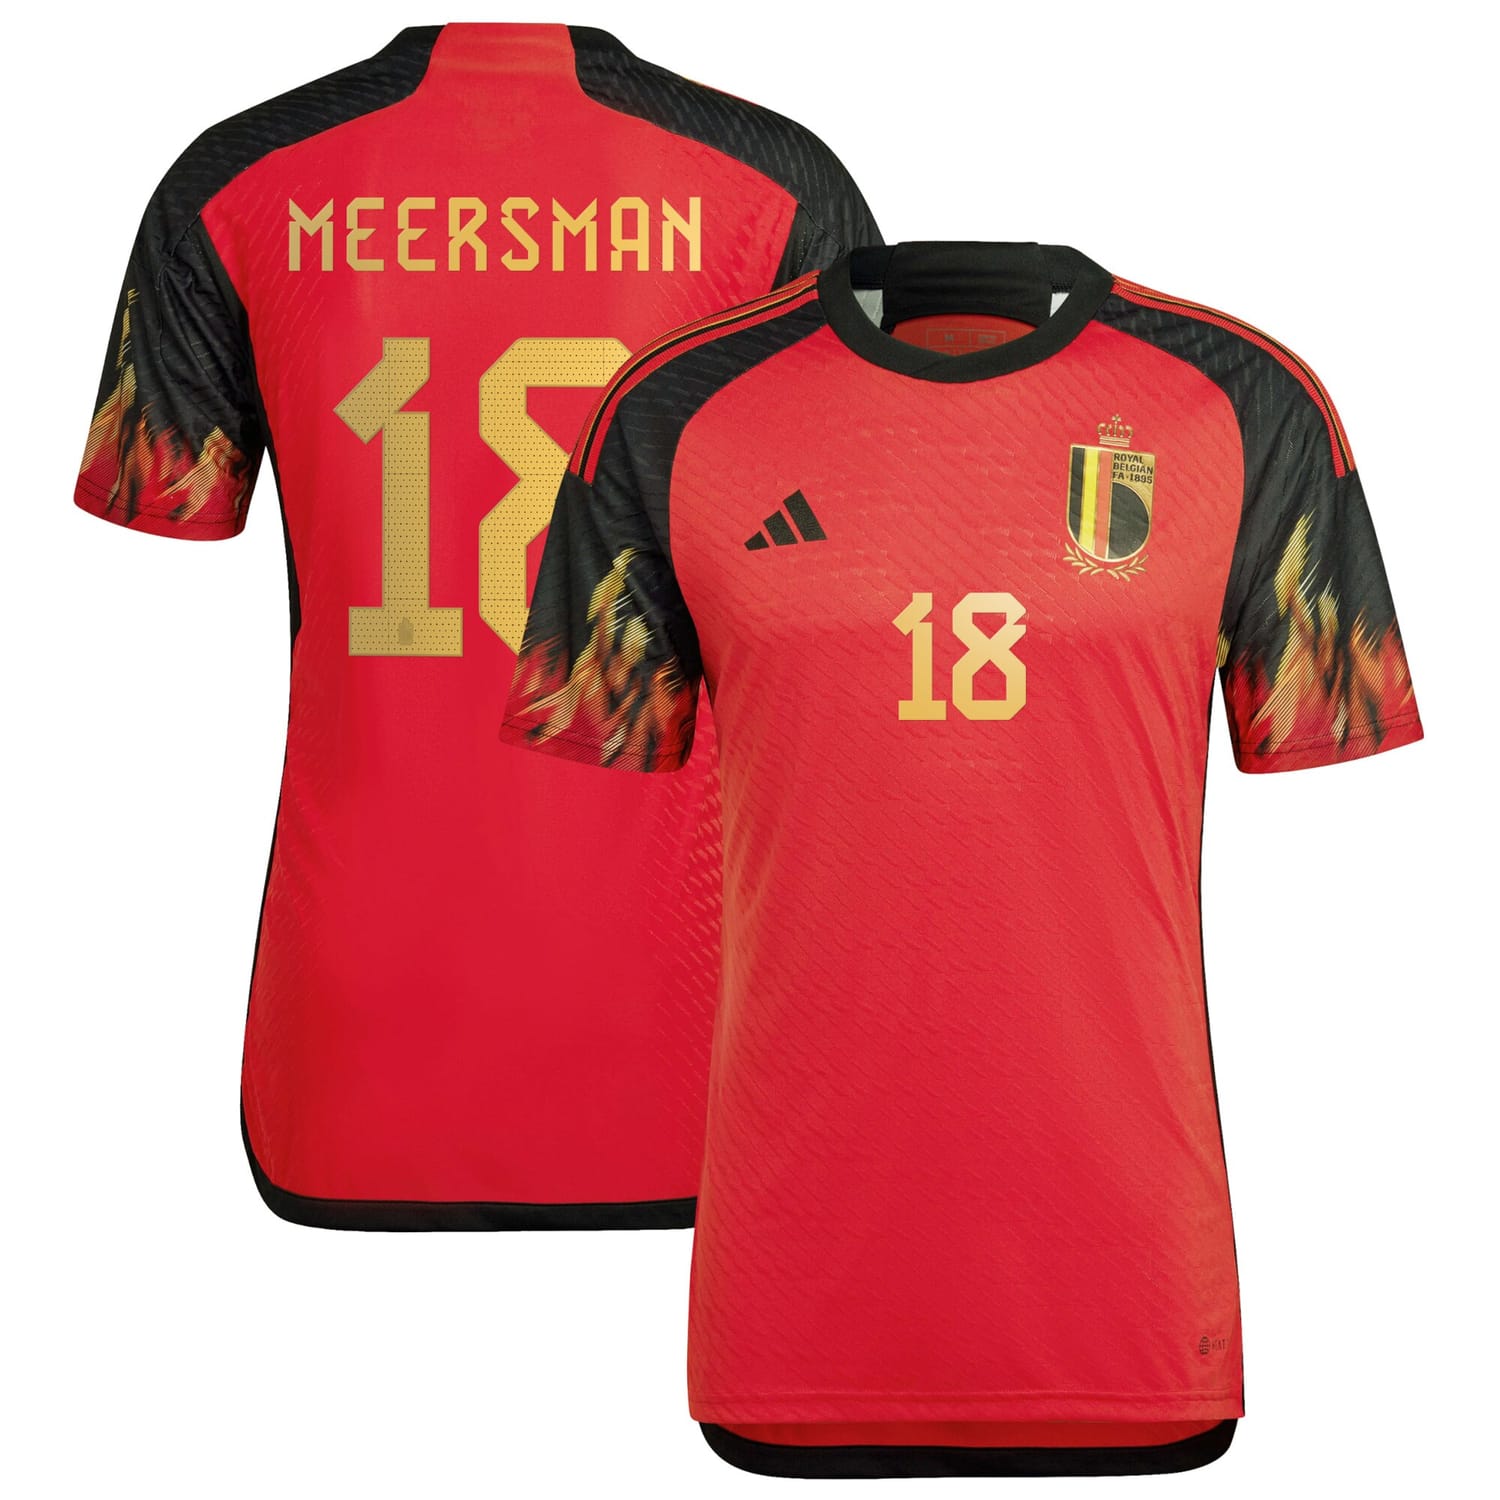 Belgium National Team Home Authentic Jersey Shirt 2022 player Fran Meersman 18 printing for Men